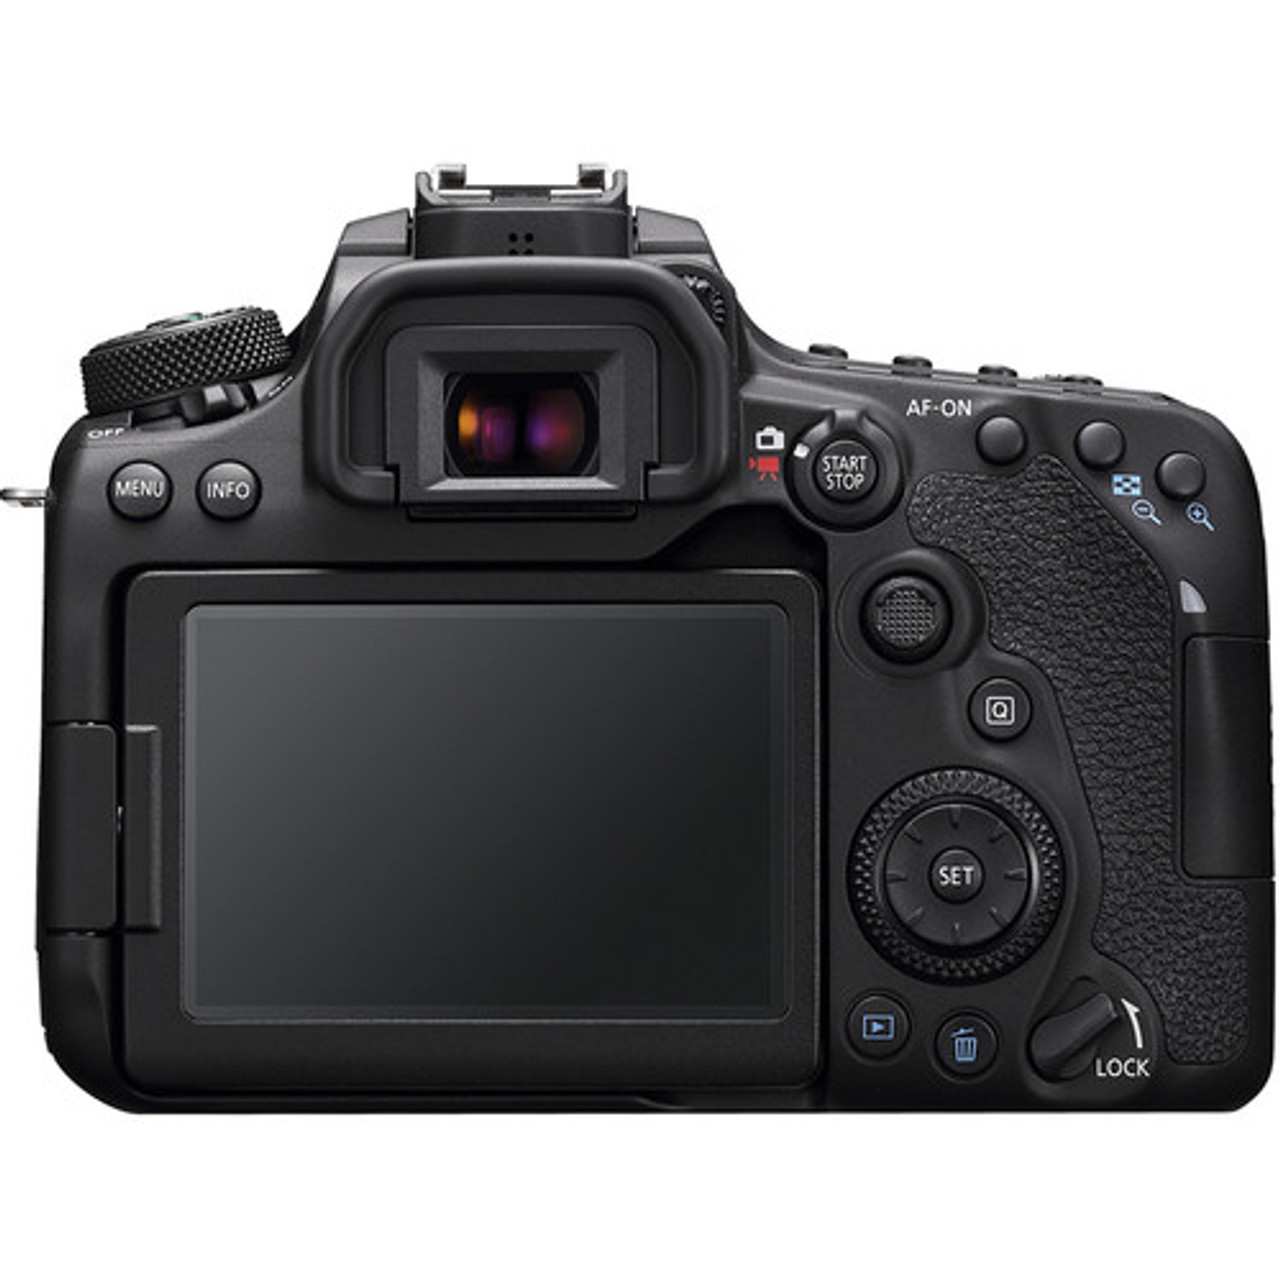 Canon EOS 90d DSLR Camera - Black (Body Only) 13803316186